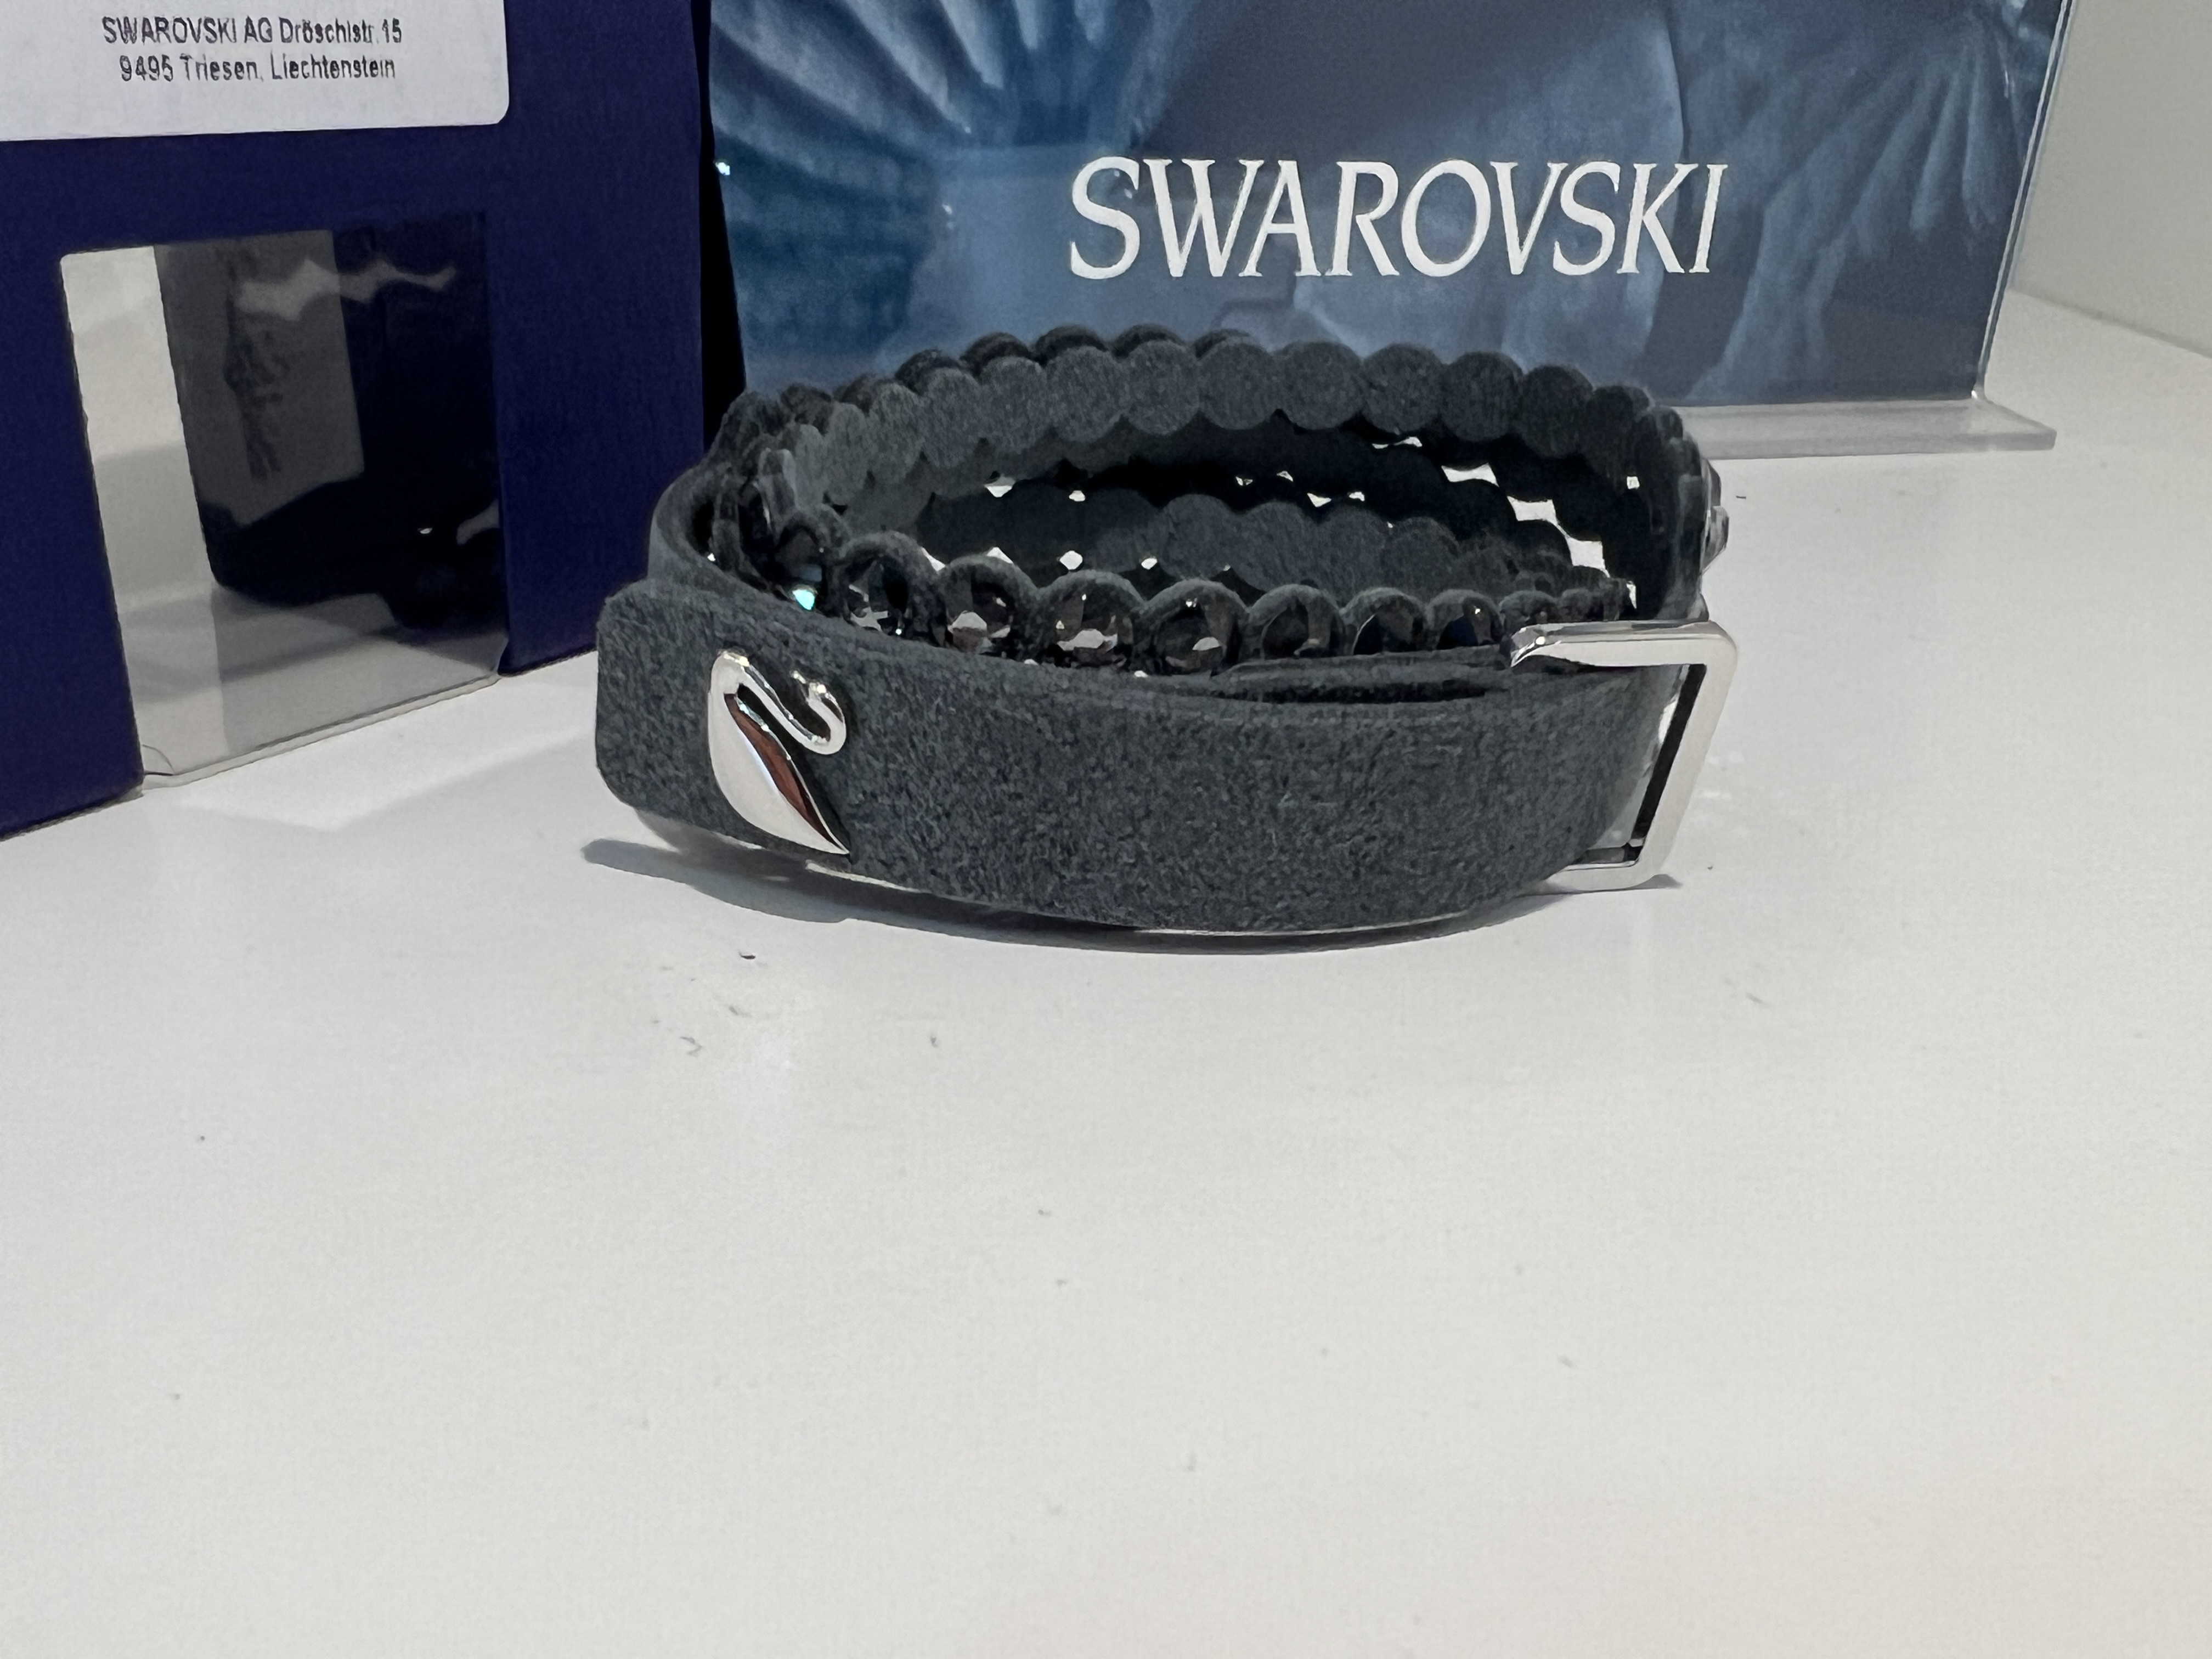 Swarovski 5512509 Armband 40 x 2 cm. Top Zustand Neuware - Unbenutzt